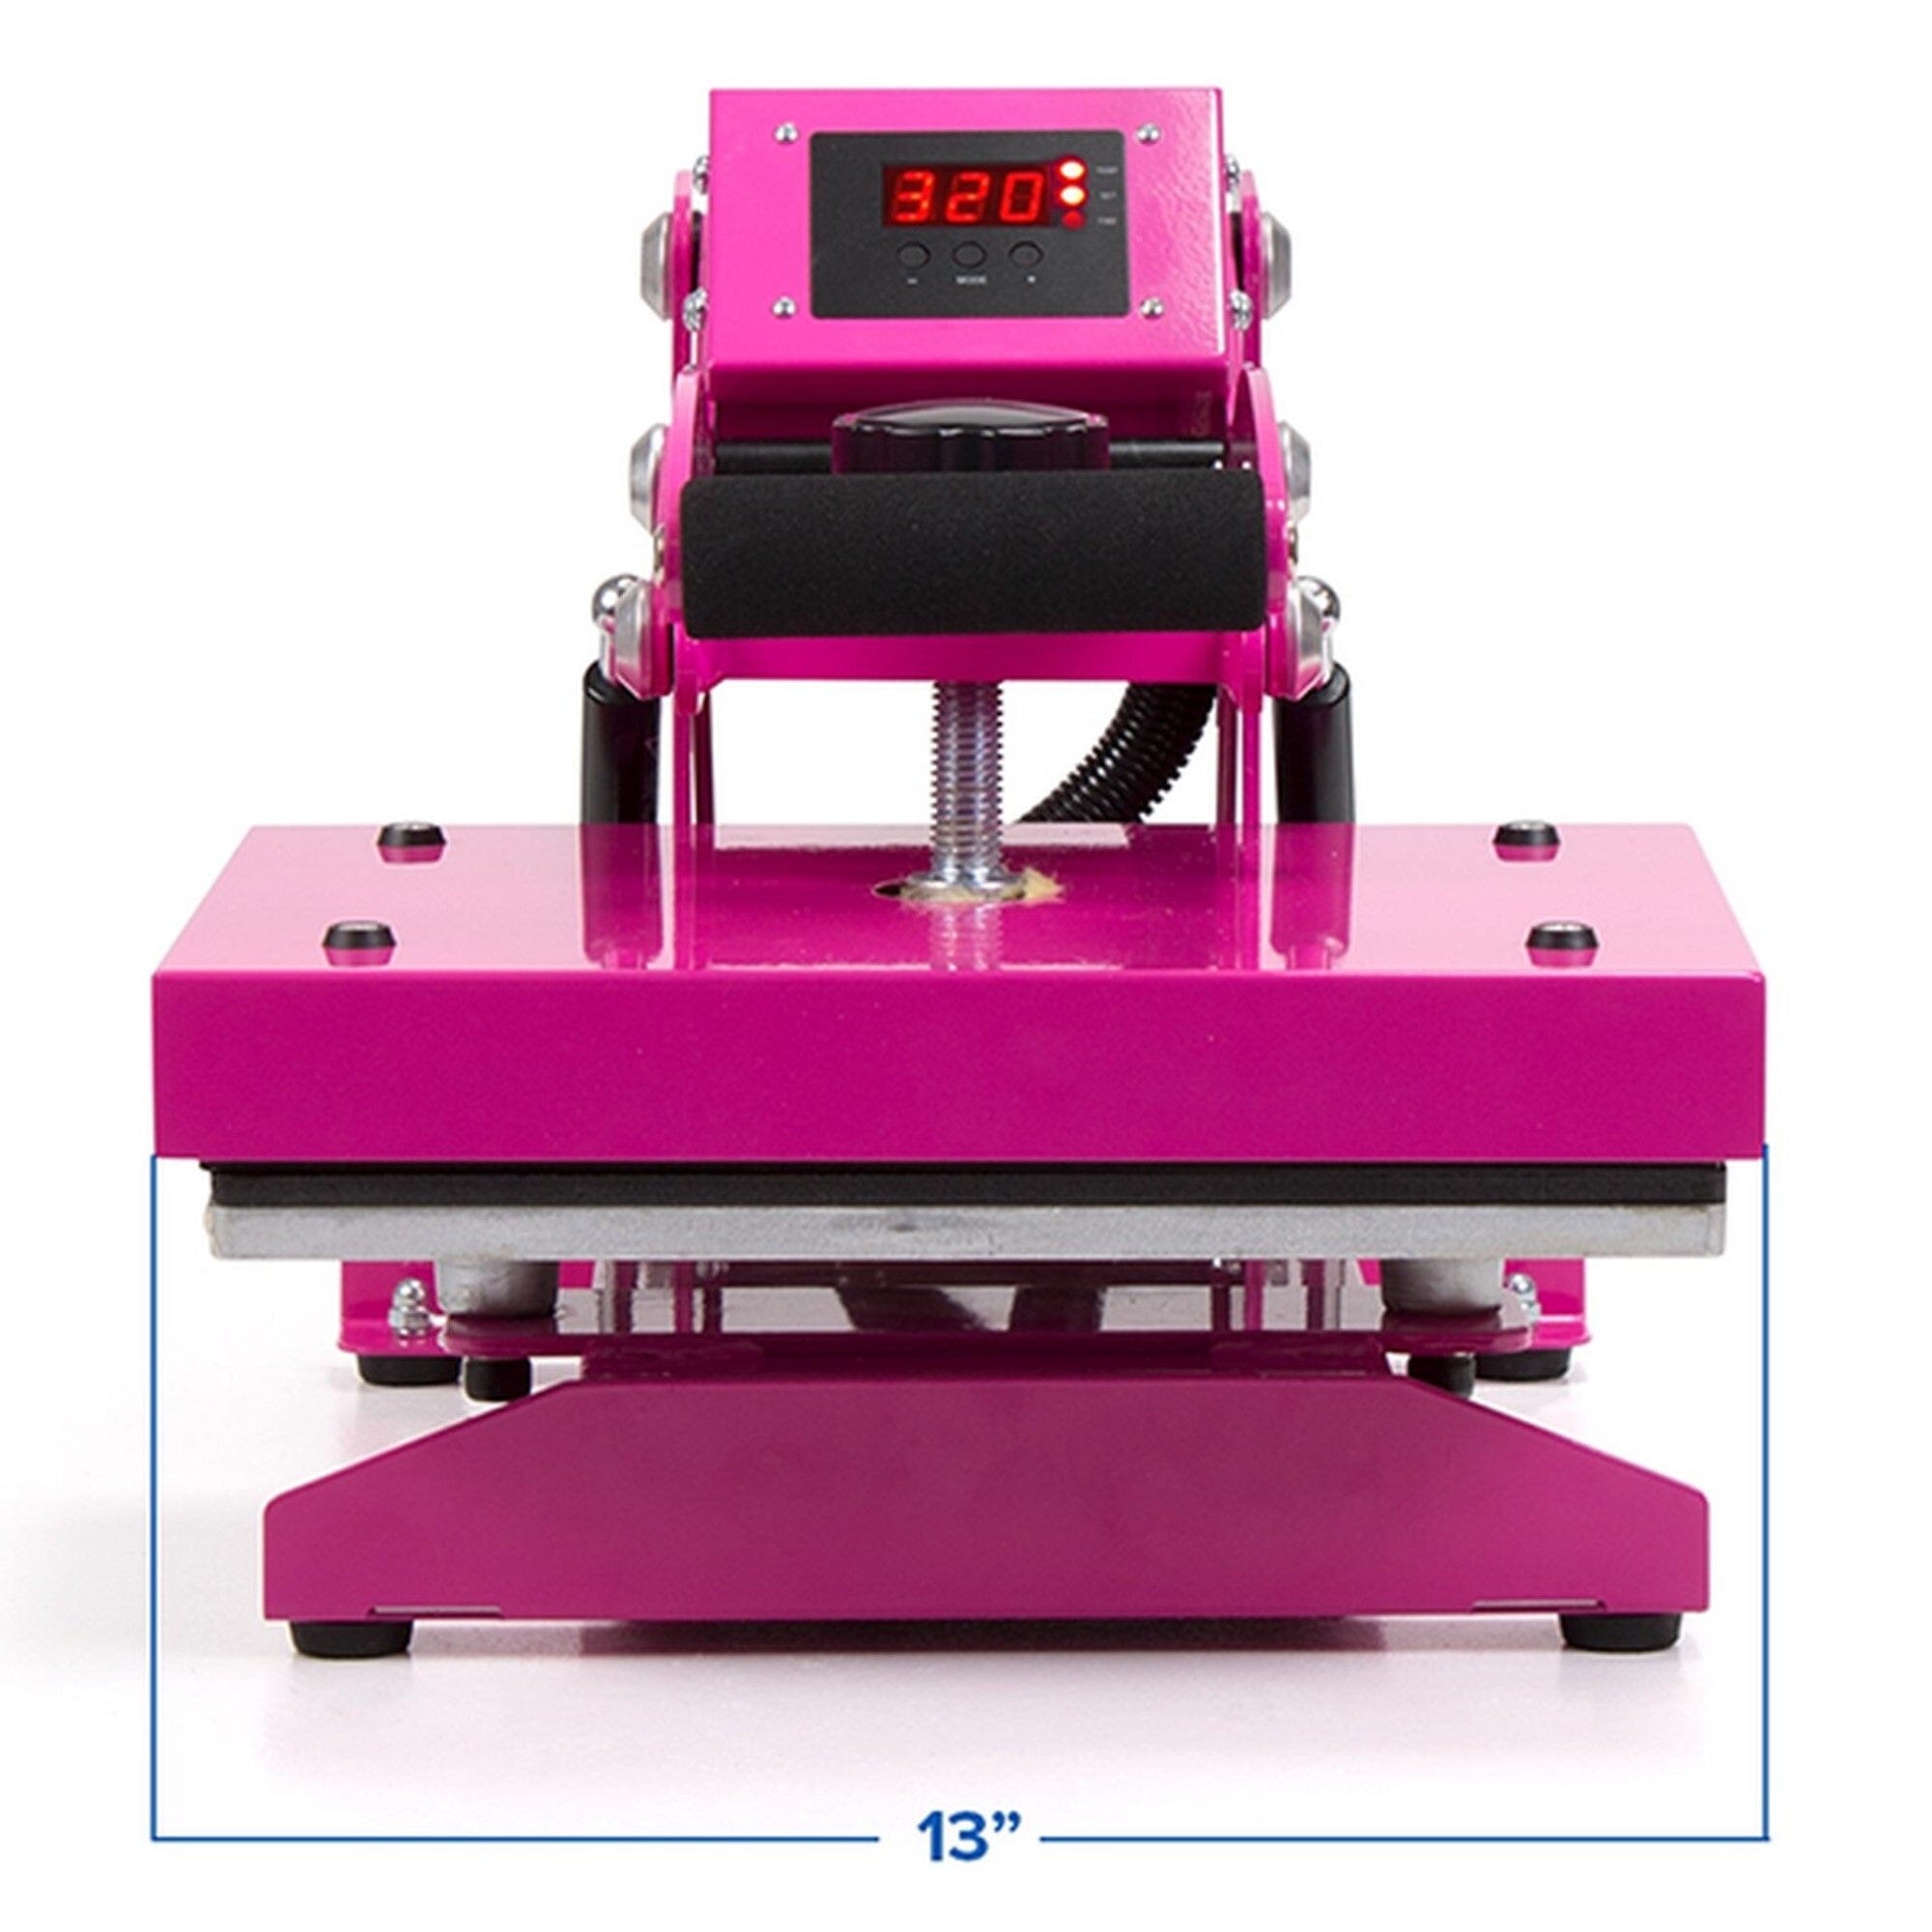 Pink Craft Heat Press 9 x 12